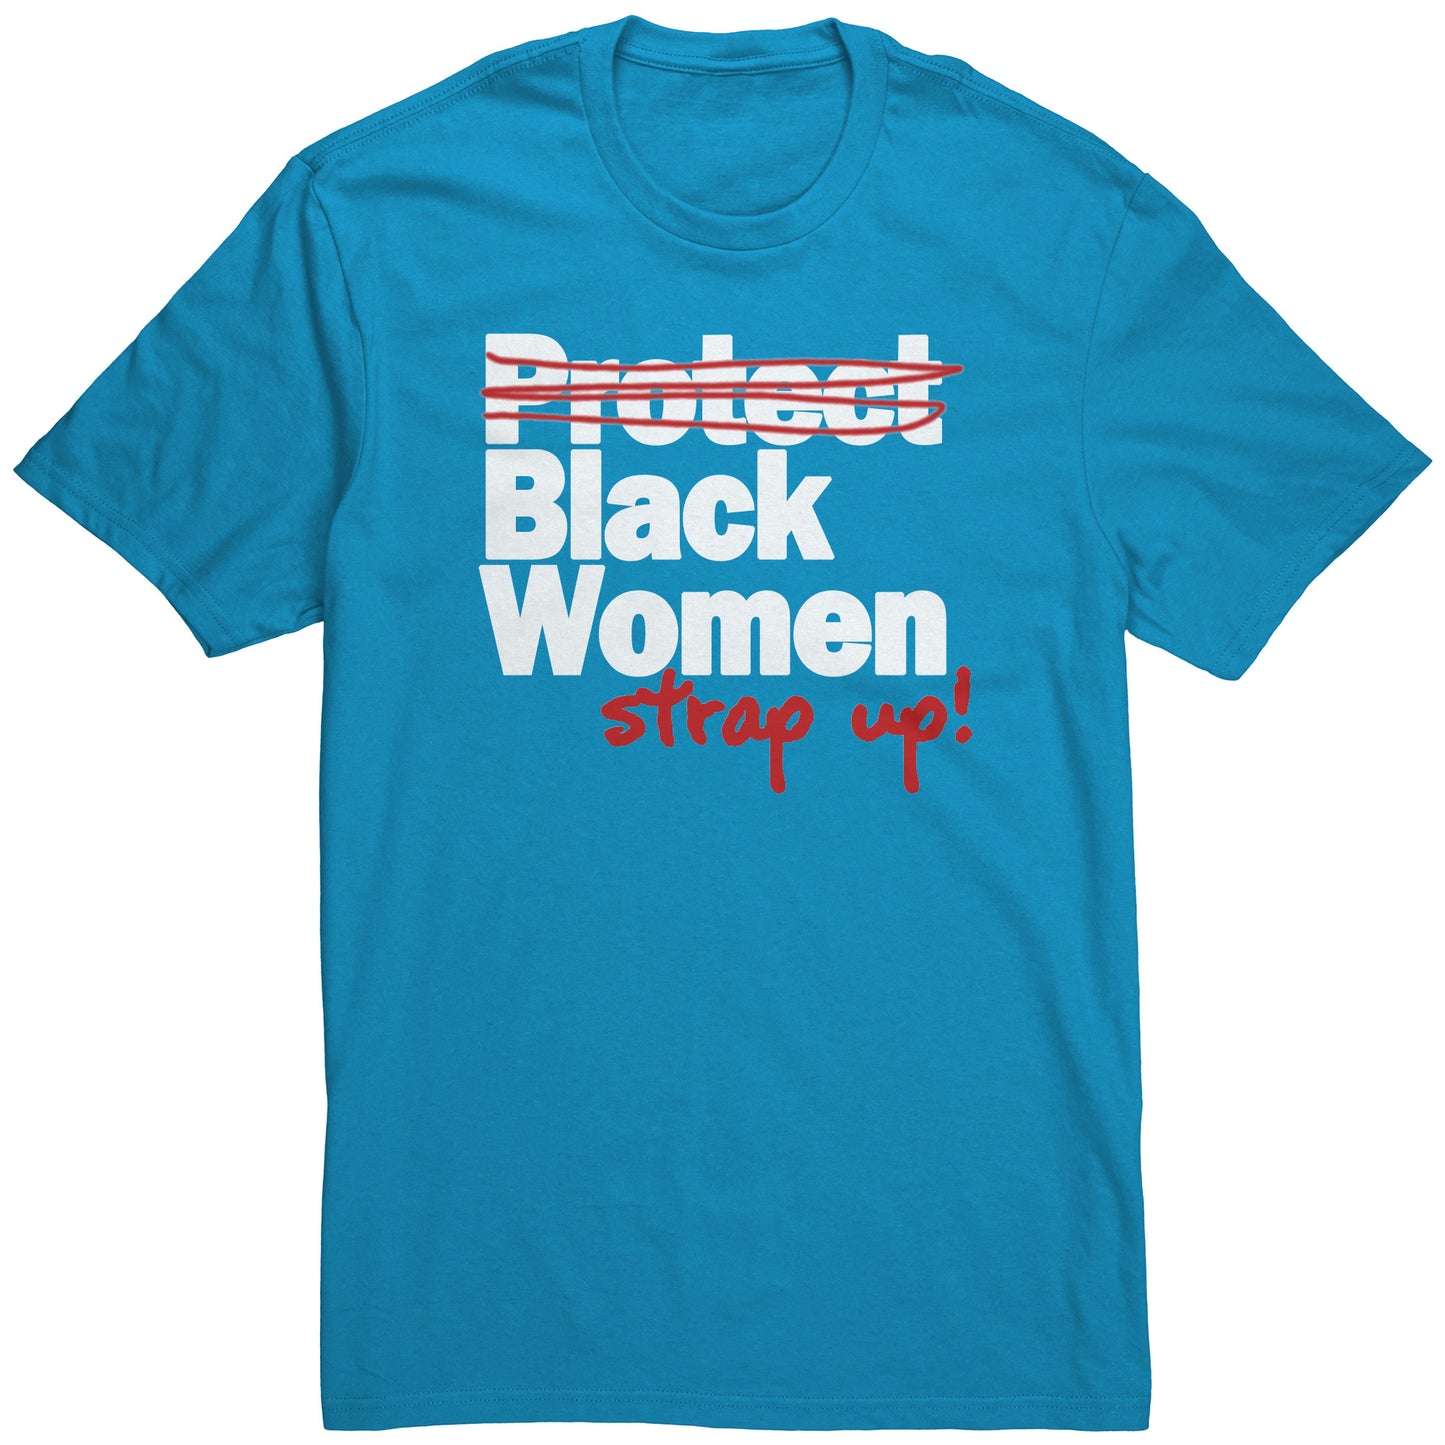 Adult Tee "Protect Black Women" (white print)